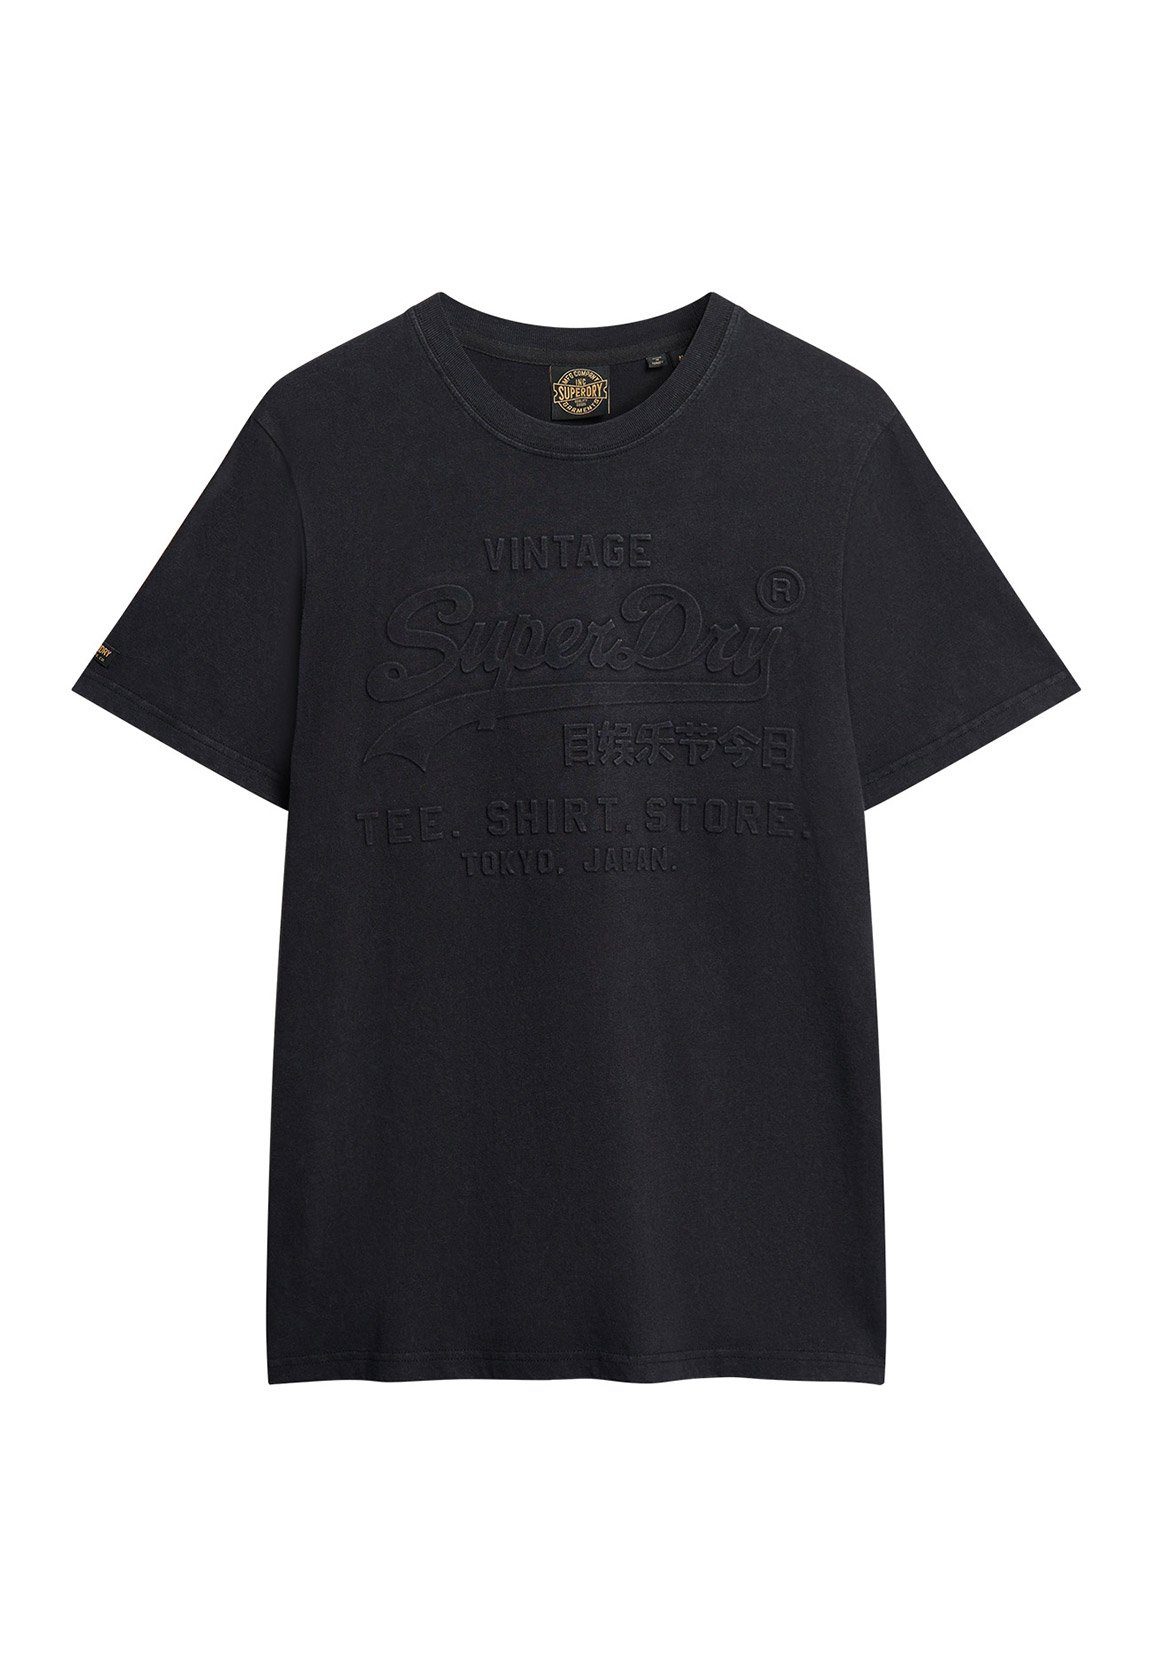 T-Shirt SHIRT EMBOSSED T Schwarz Herren Jet Black Superdry VL Superdry T-Shirt